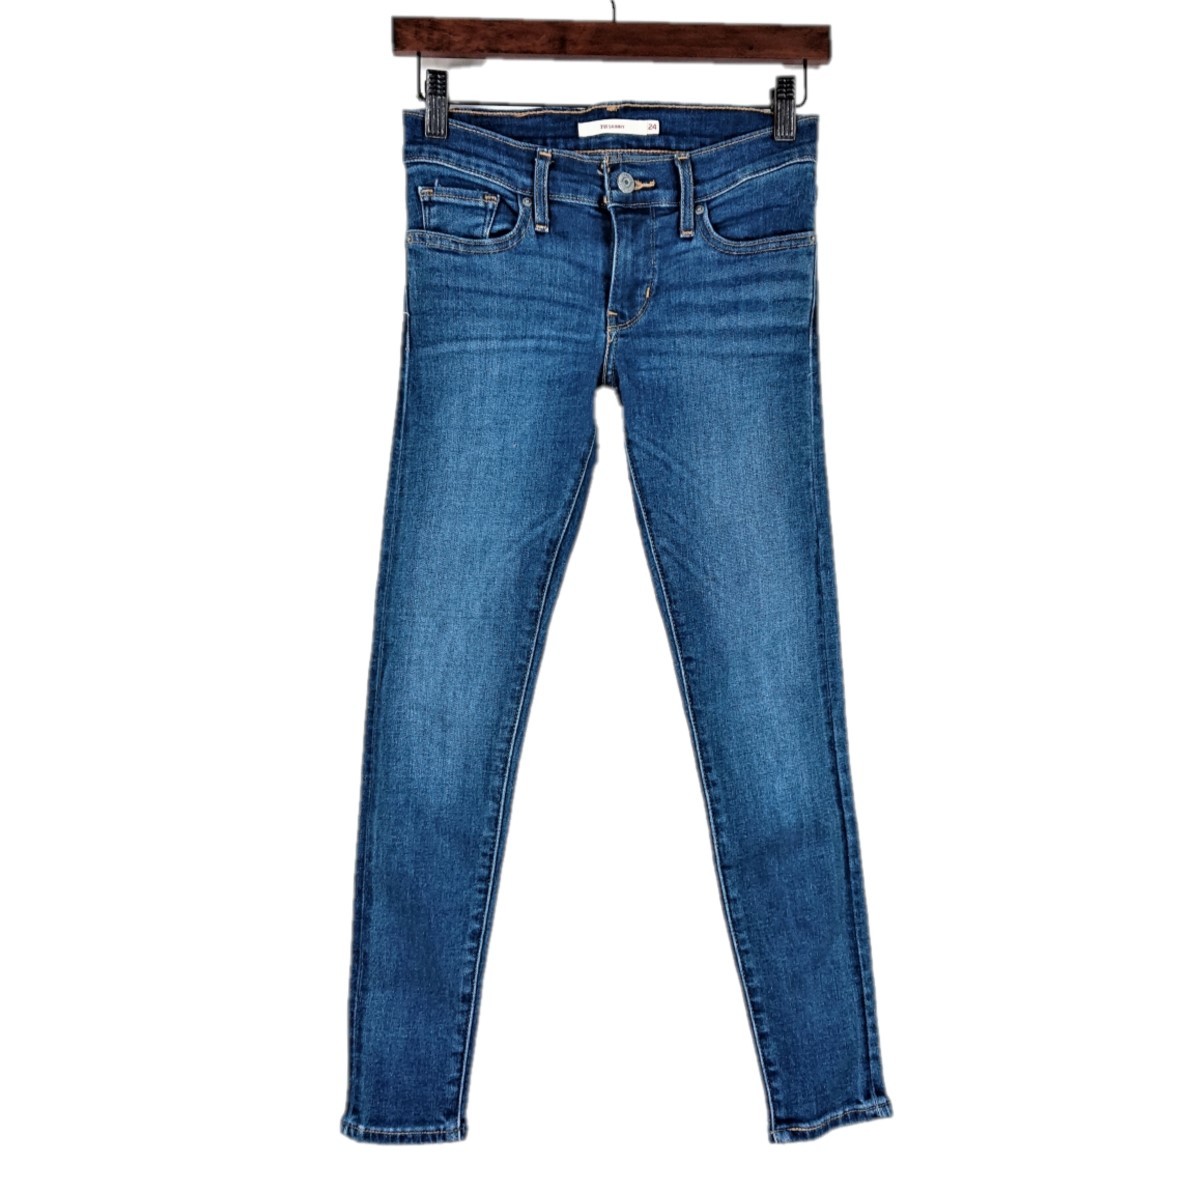 G0318 Levi's Denim pants jeans 711 Asian Fit skinny stretch cell bichipeaceLS